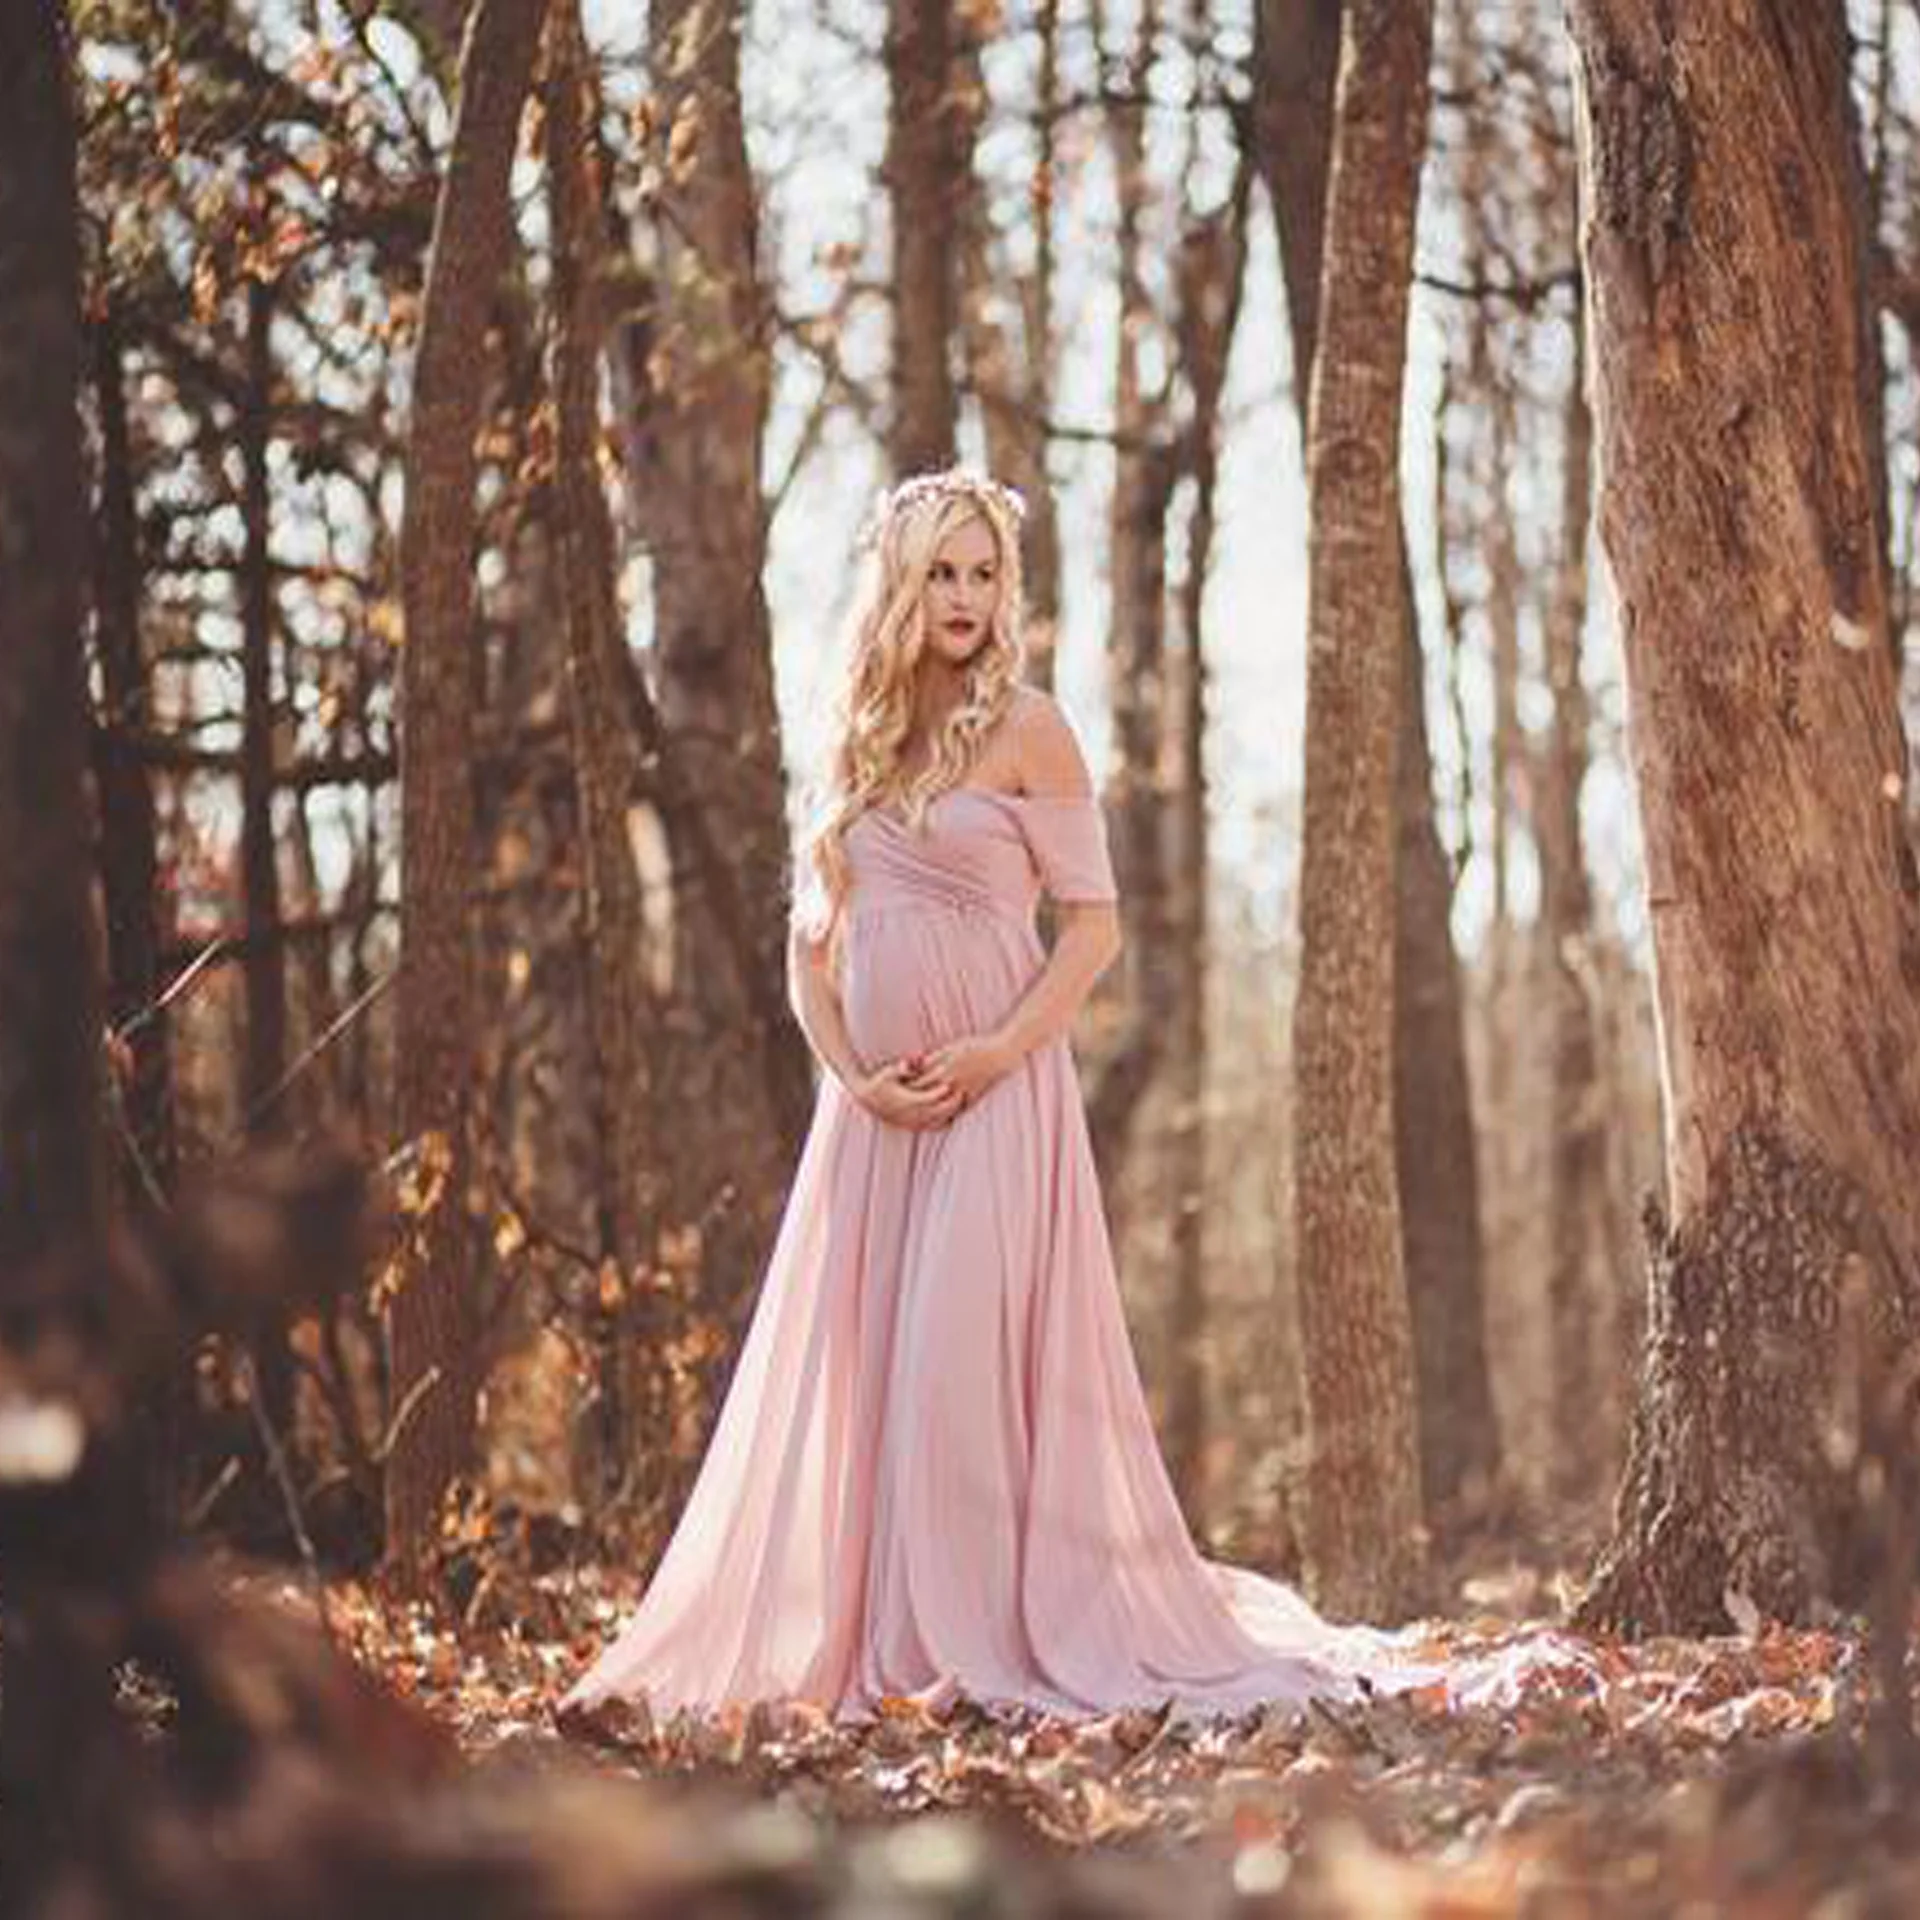 Women Pregnant Dress Props Ruffles Off Shoulder Maternity Gown photo shoot